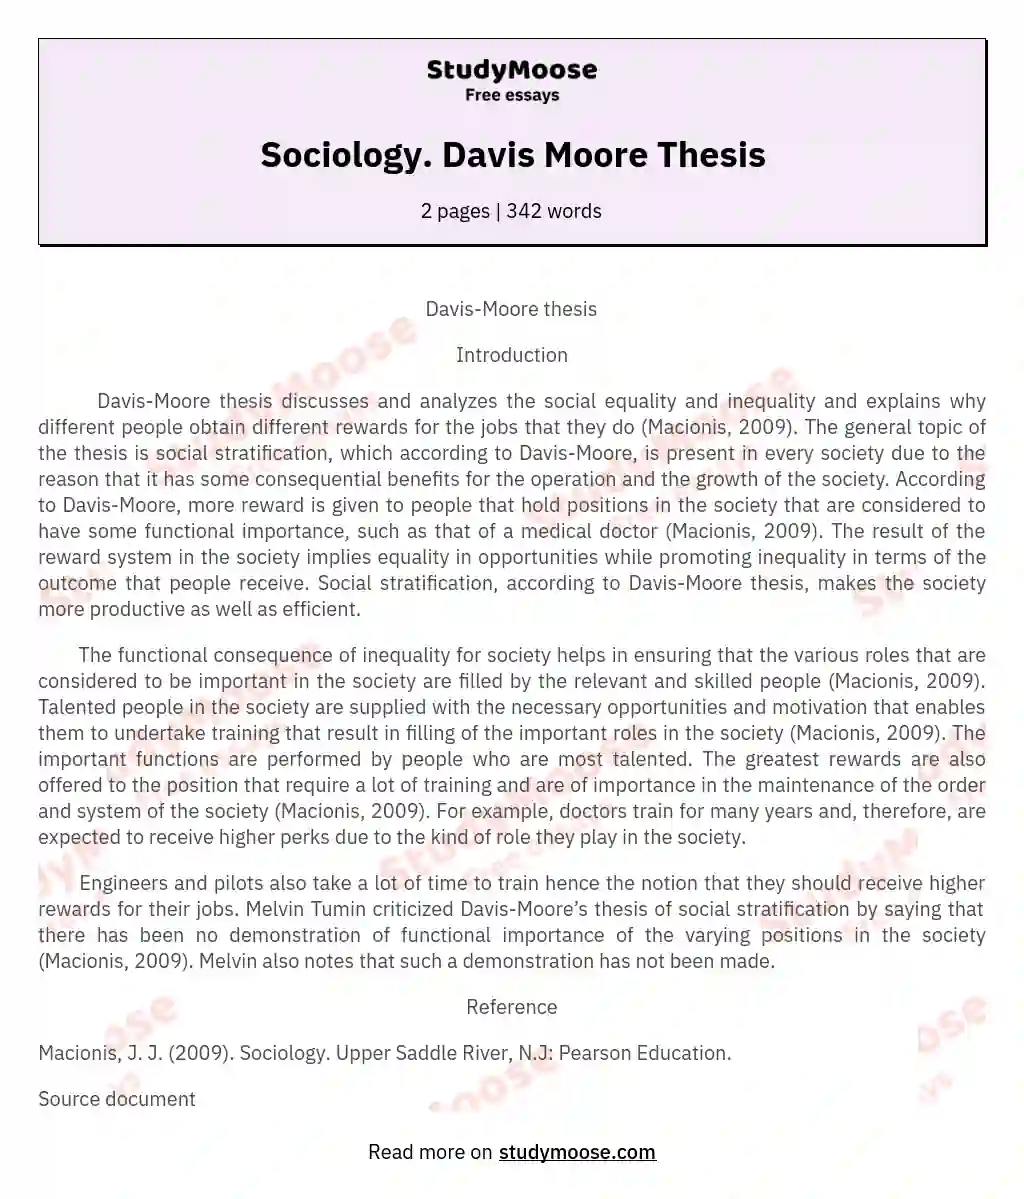 Sociology. Davis Moore Thesis essay